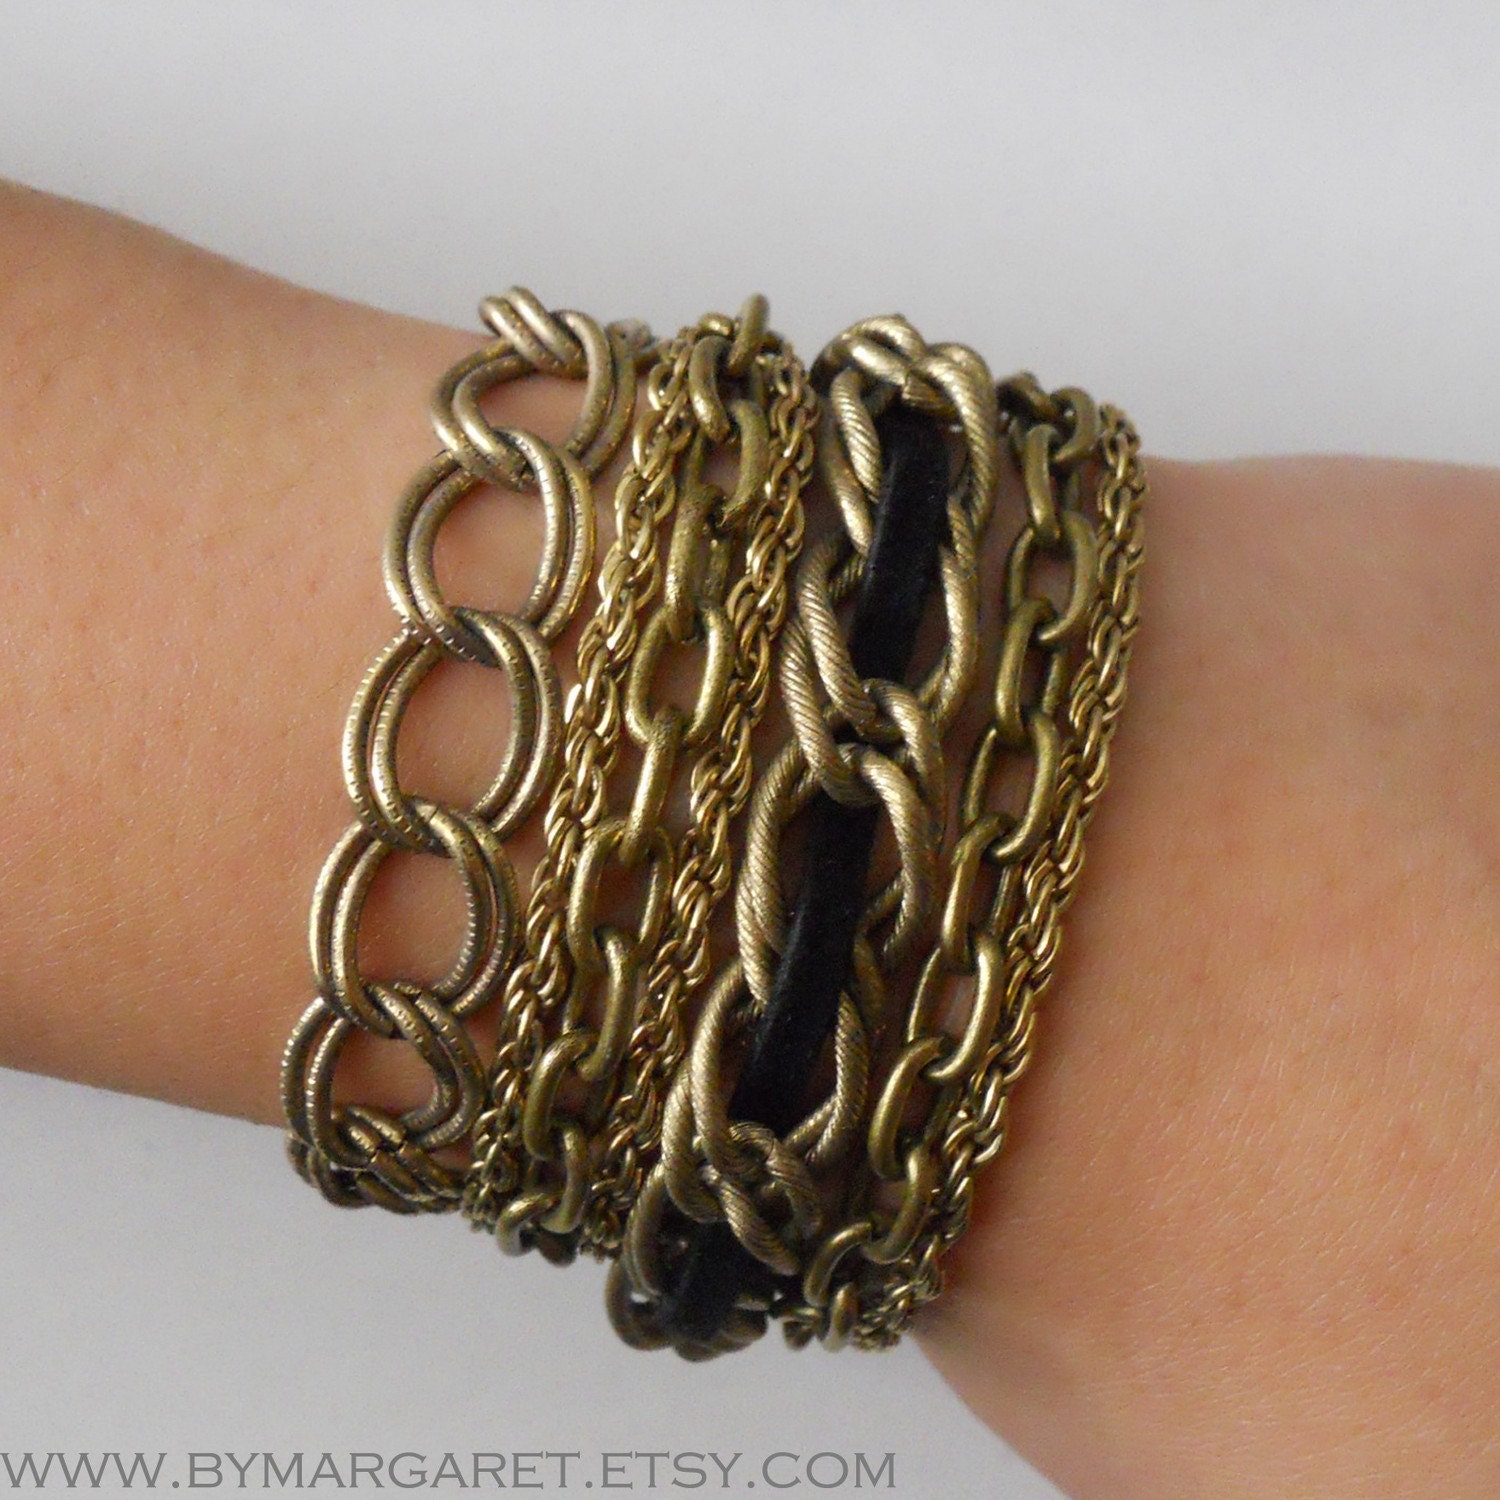 Black ASSEMBLY multi-chain bracelet, antique bronze chains, leather suede, friendship bracelet, layered bracelet